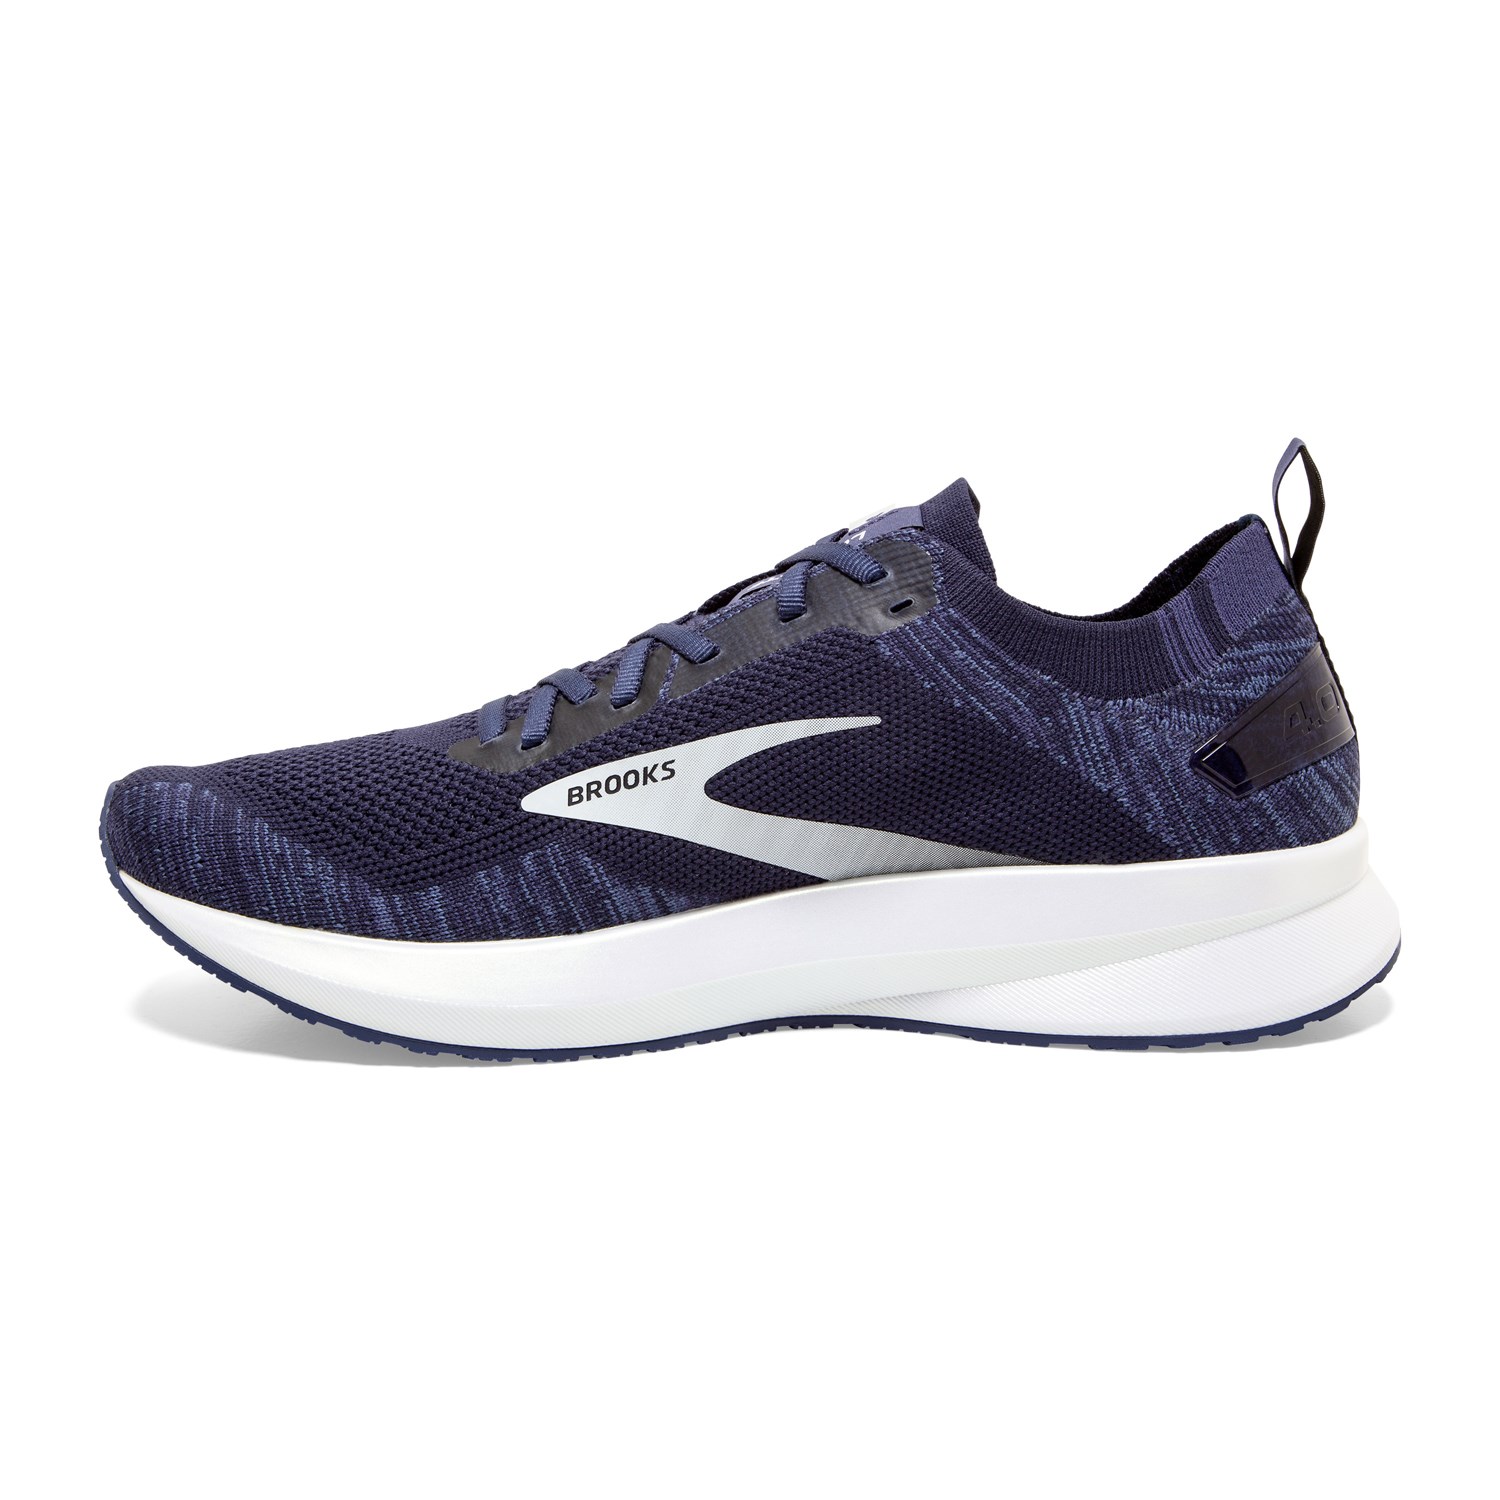 Brooks Levitate 4 - Mens Running Shoes - Navy/Grey/White | Sportitude